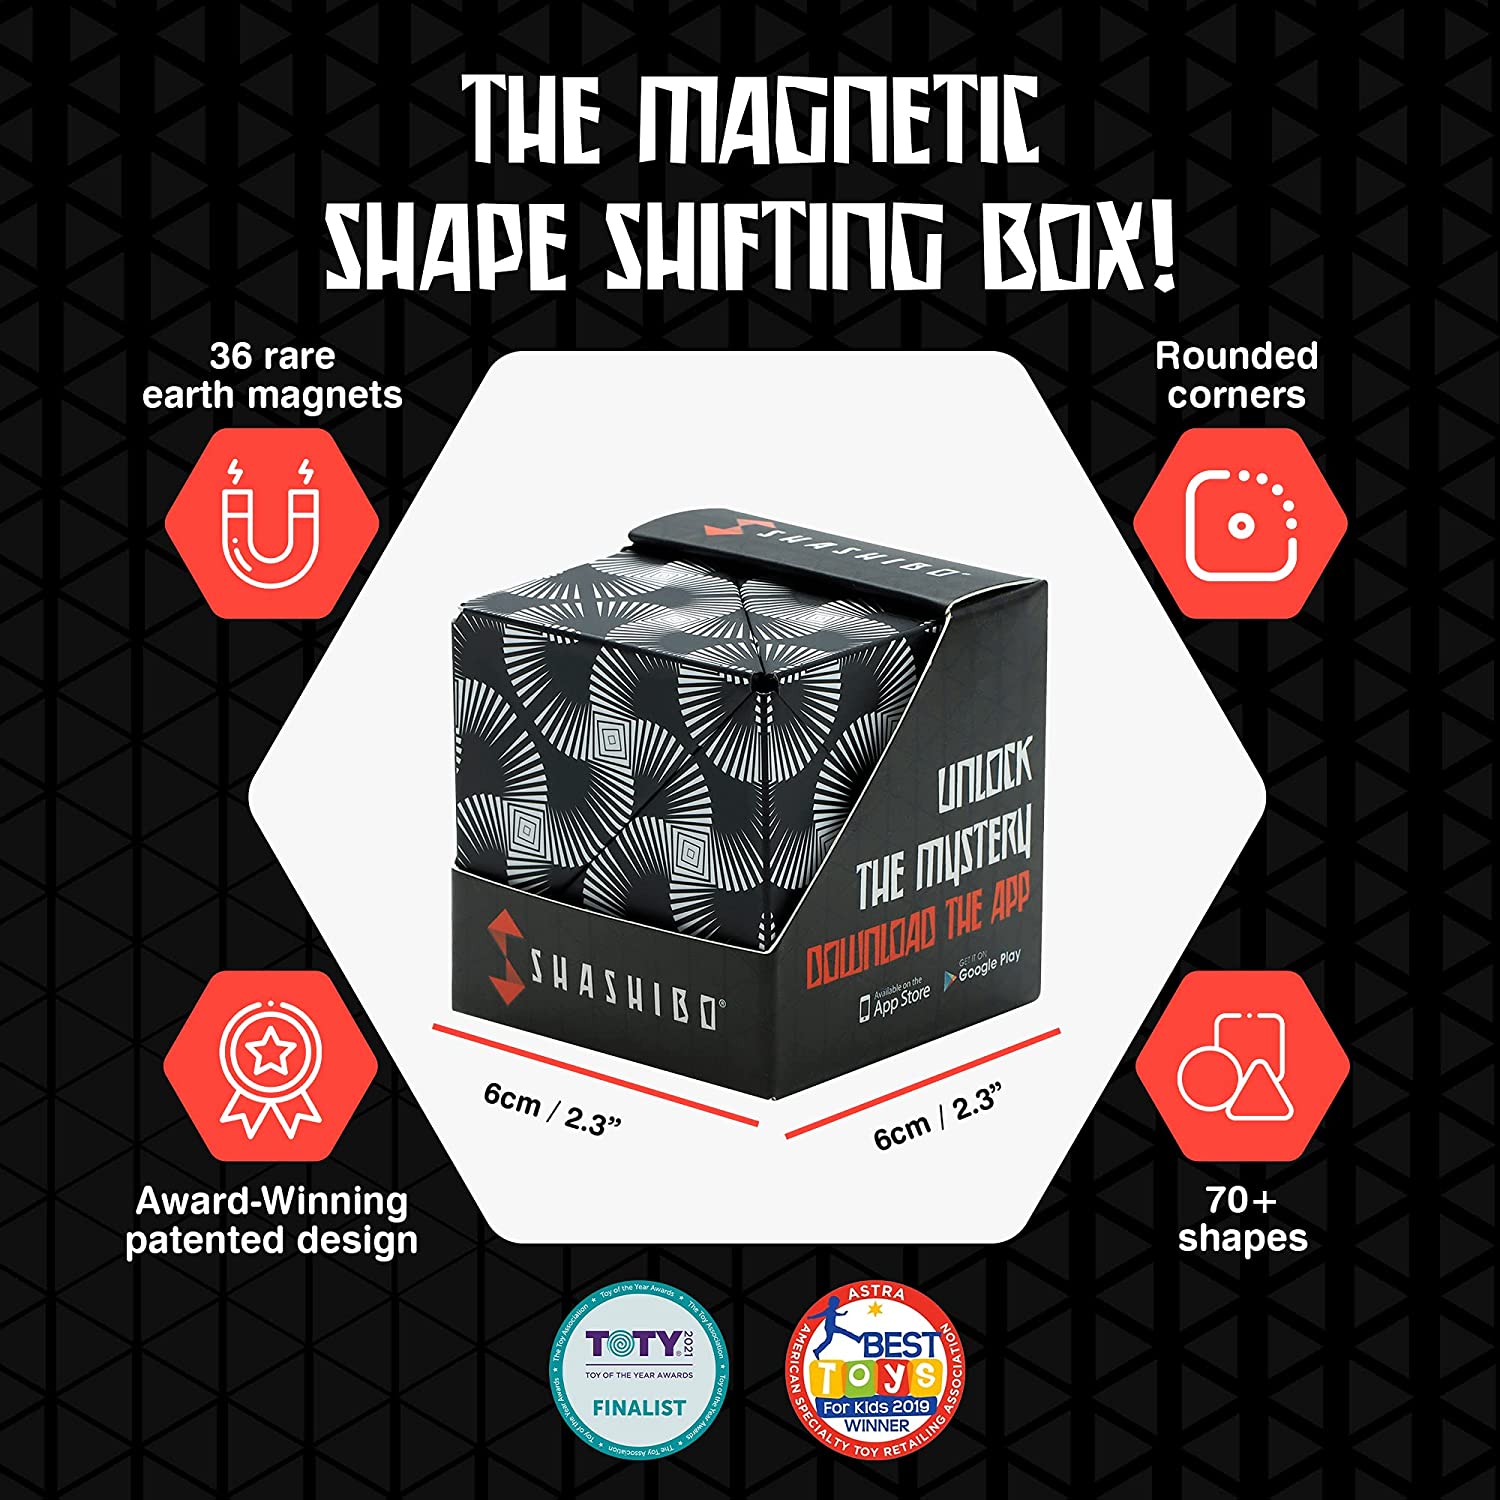 5 Reasons to Buy the SHASHIBO Shape Shifting Box